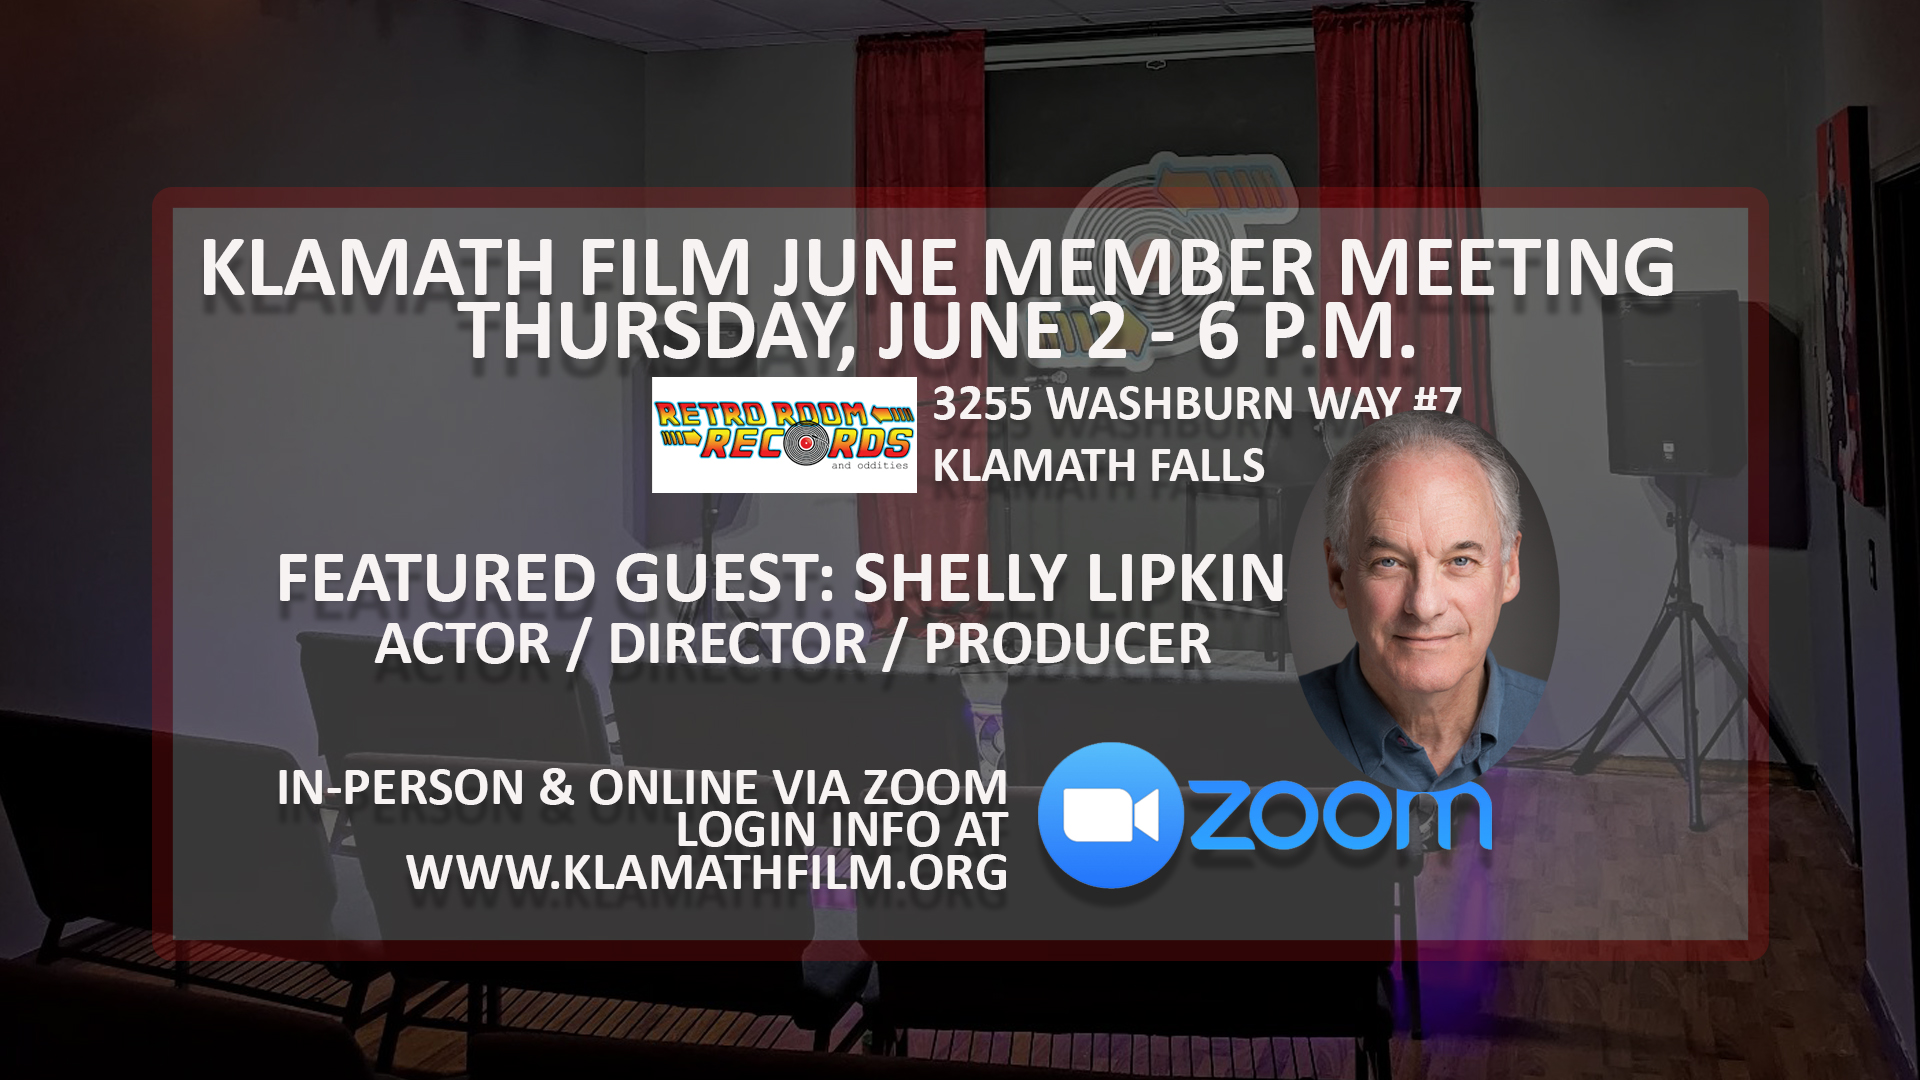 Veteran Hollywood actor Shelly Lipkin featured guest at June member meeting